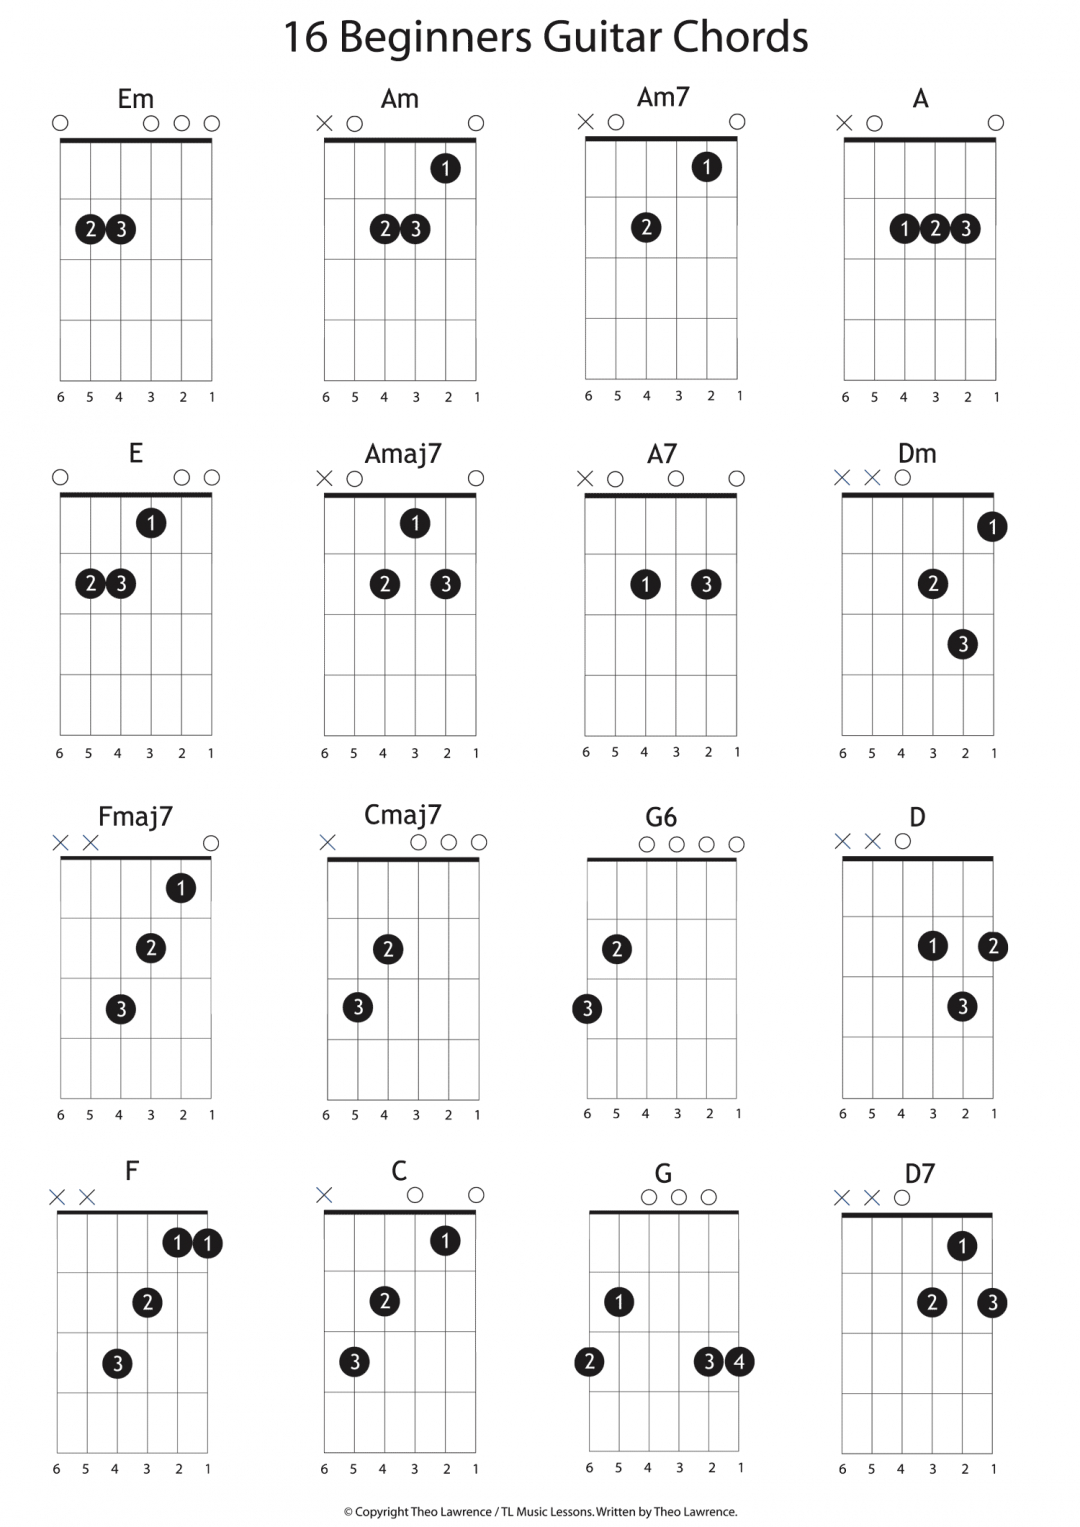 Beginner Guitar Chords 16 Beginners Guitar Chords Learn Guitar For Free